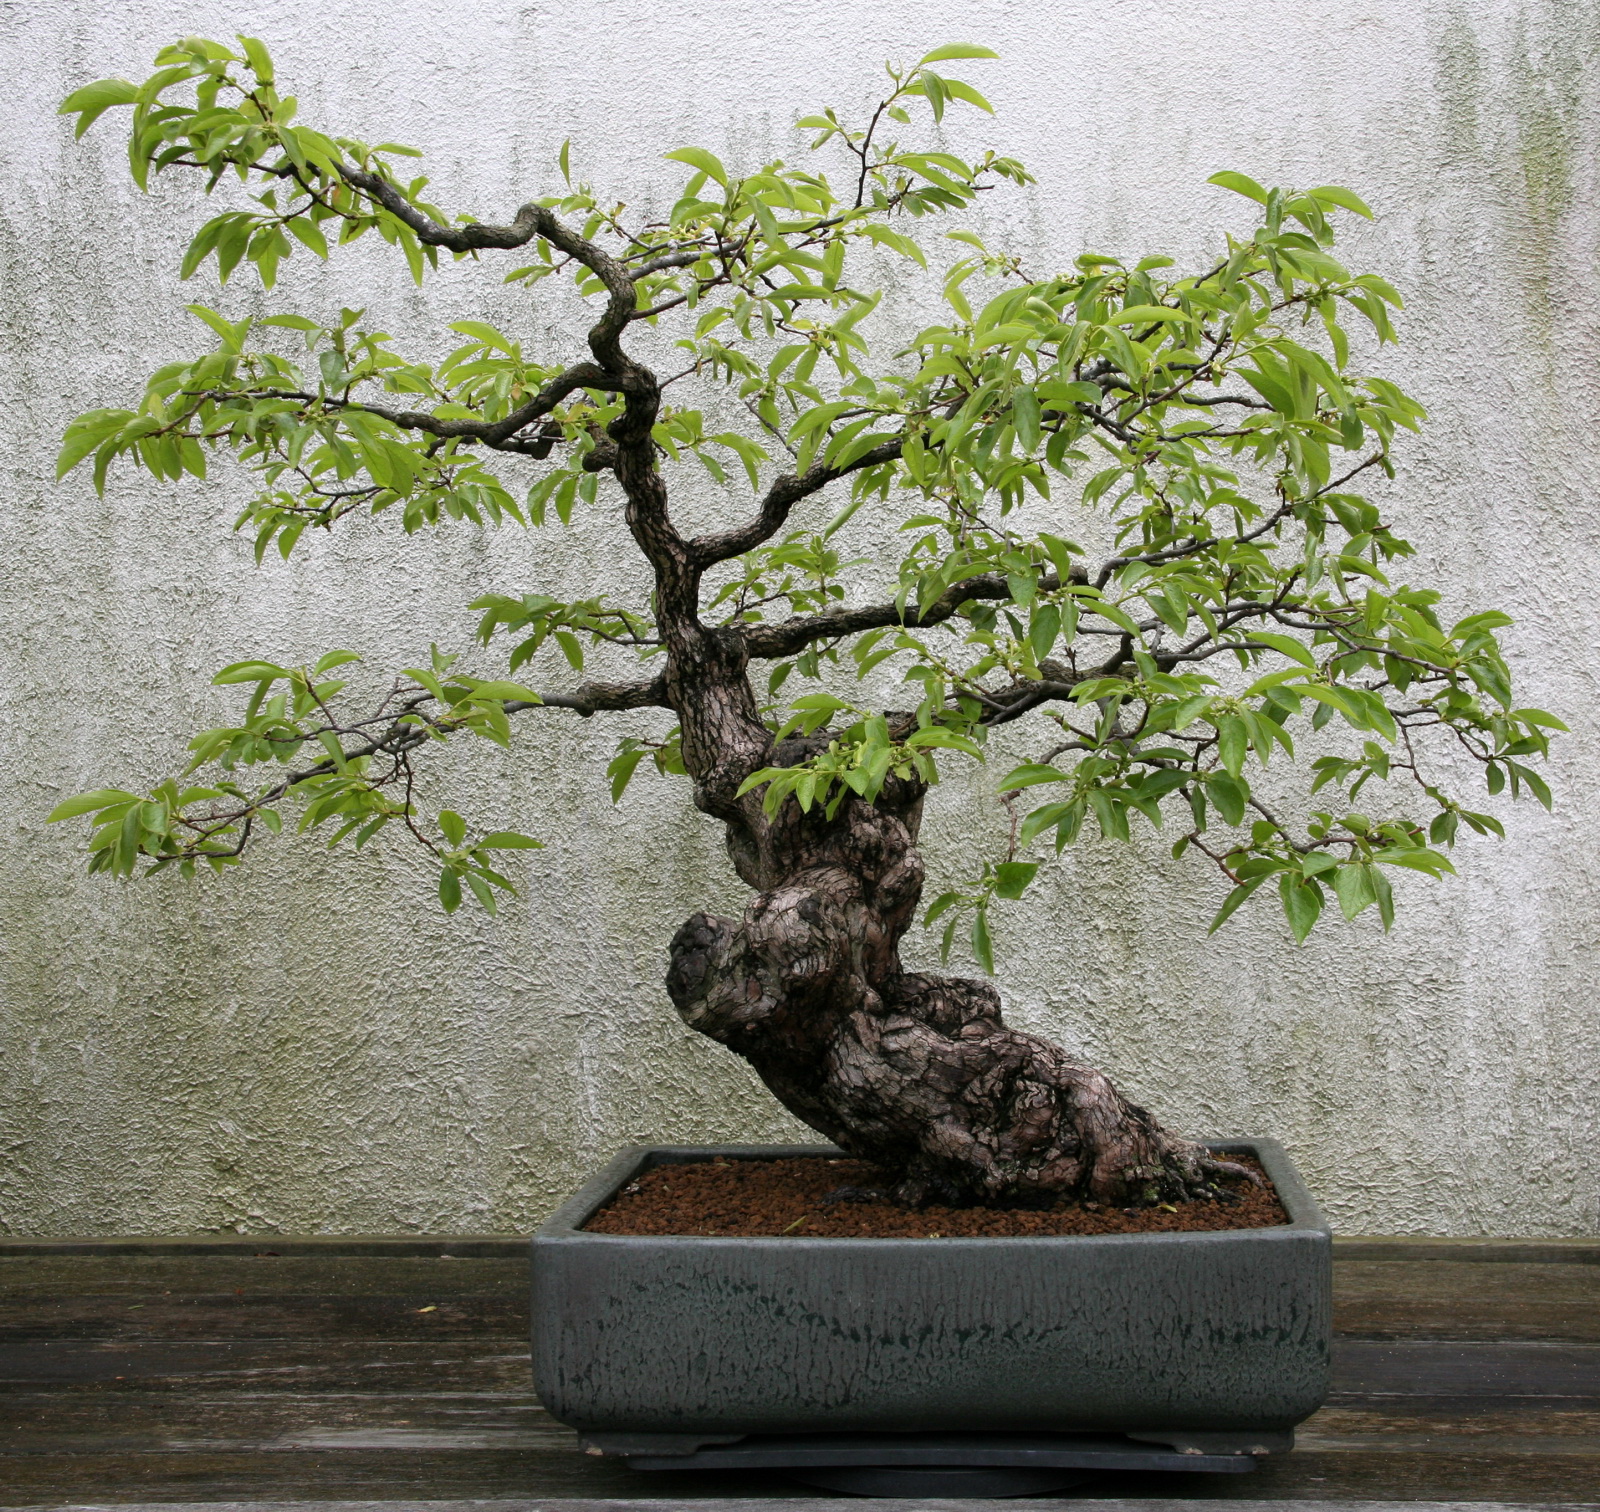 the bonsai tree in a concrete planter is very attractive